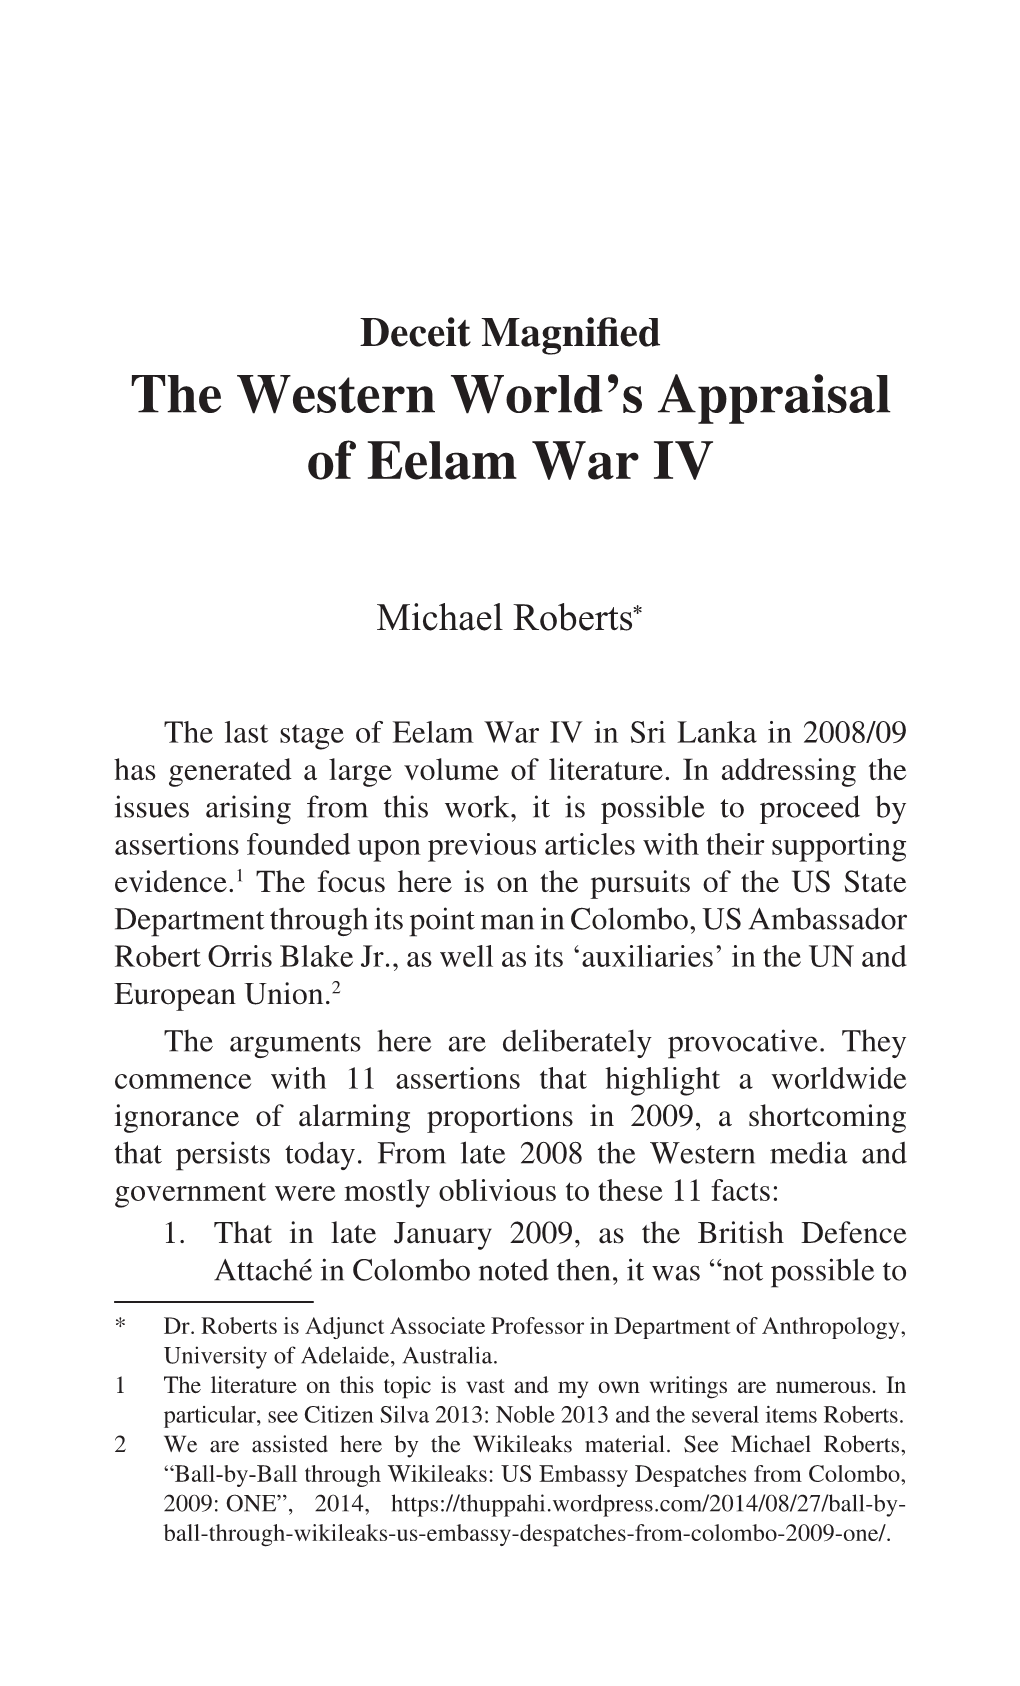 The Western World's Appraisal of Eelam War IV